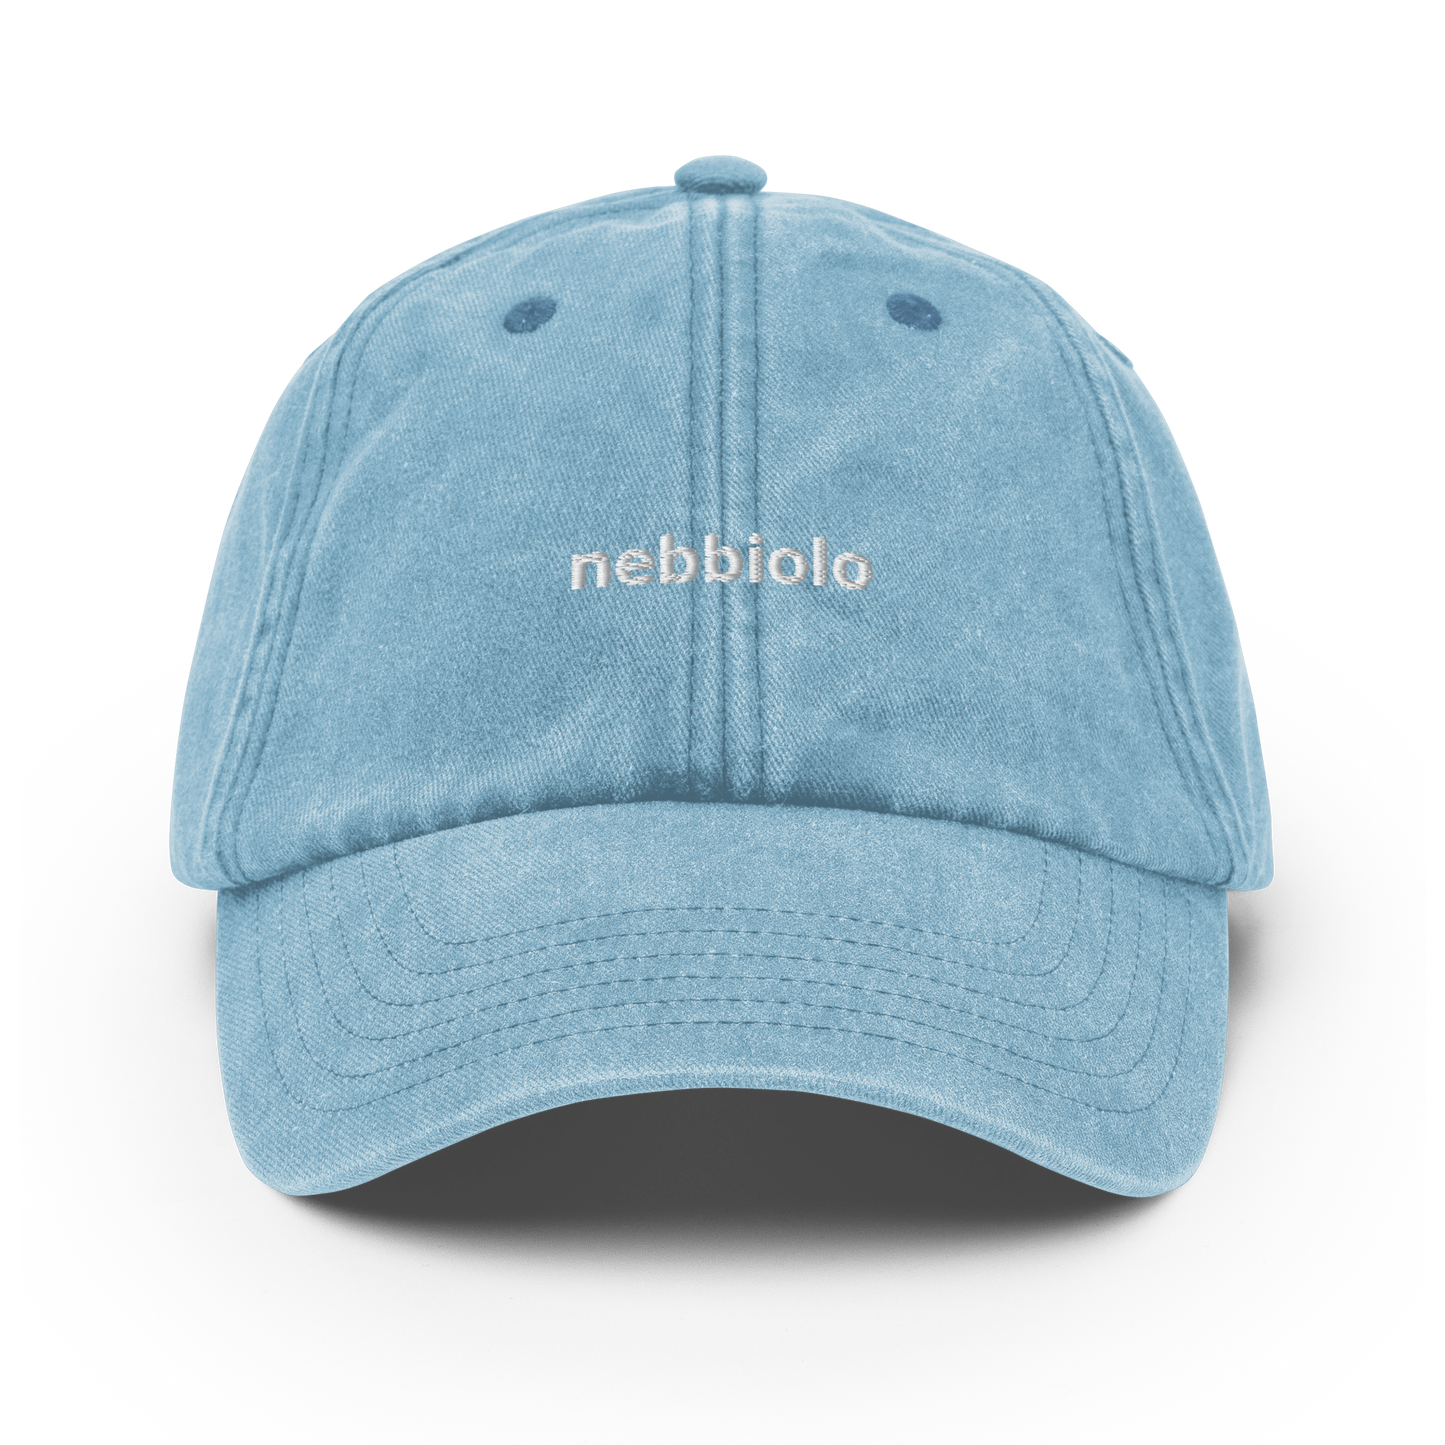 nebbiolo - Vintage Hat